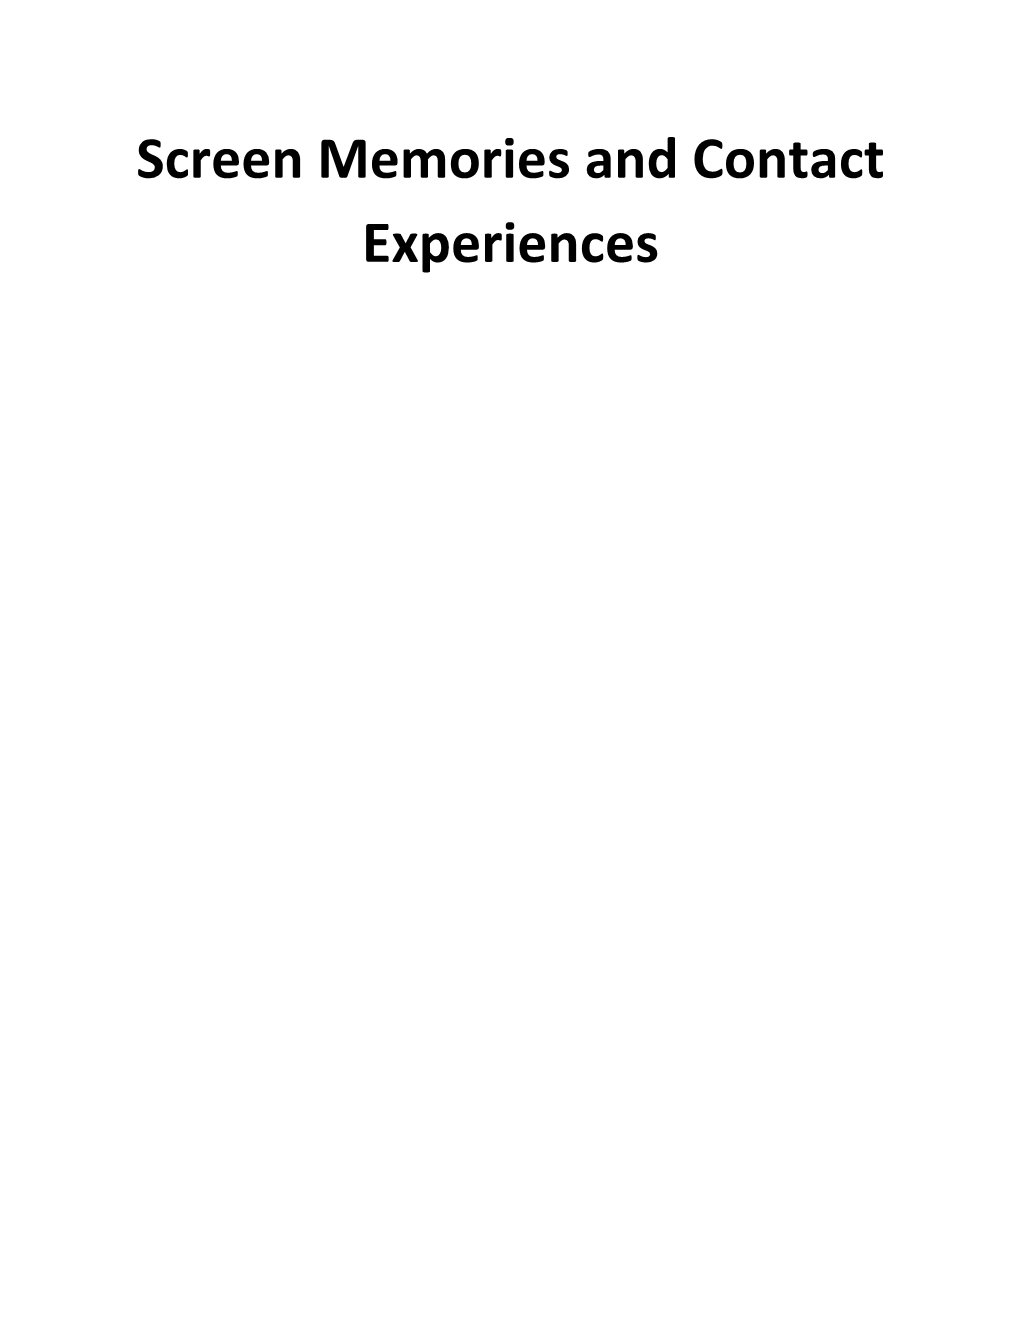 Screen Memories and Contact Experiences Contact Forum May/June 1995 - Jeffpolachek.Com